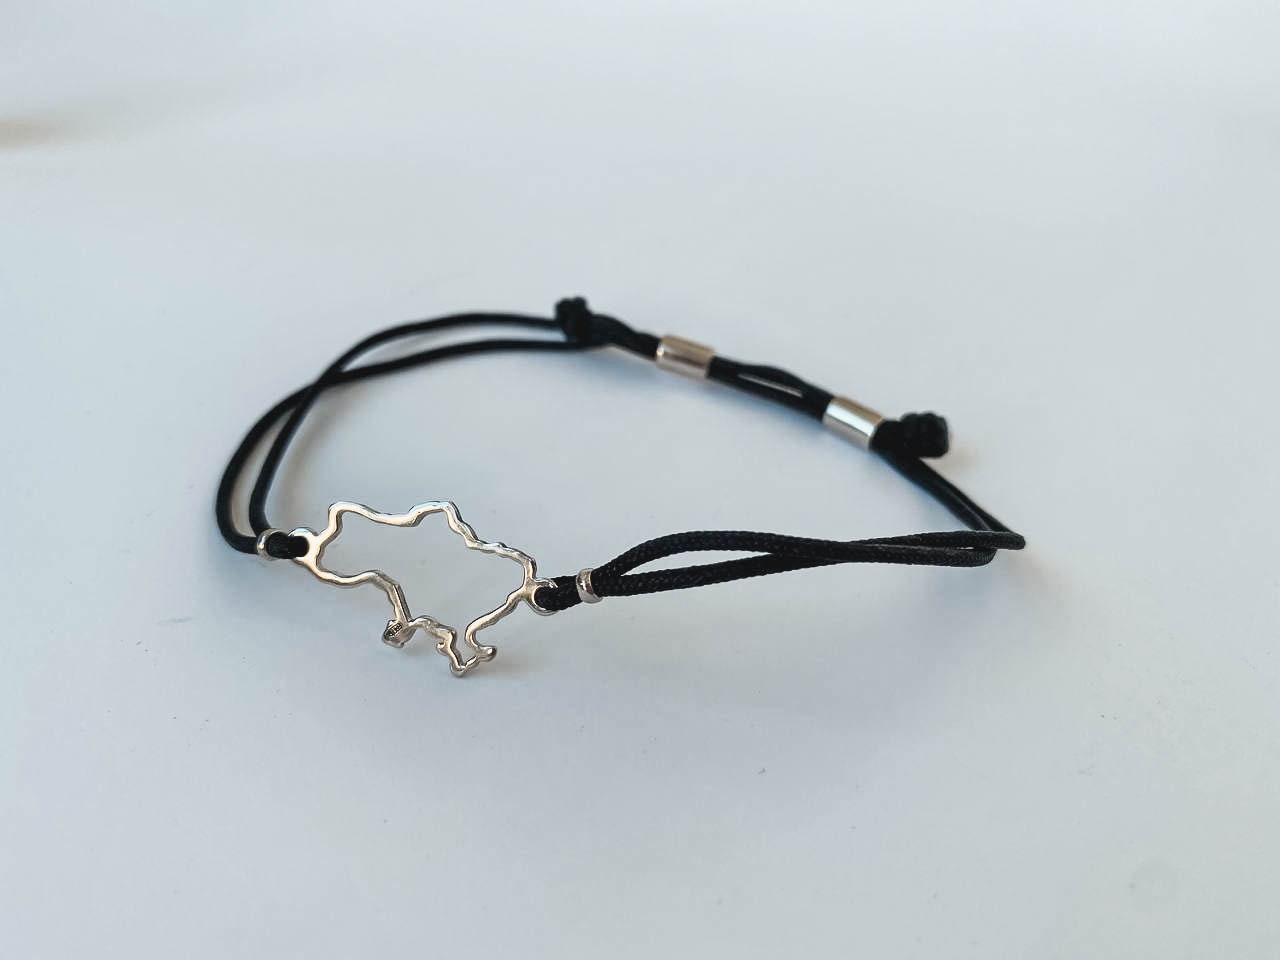 Support Ukraine 🇺🇦 Necklace / Bracelet – UntamedHearts